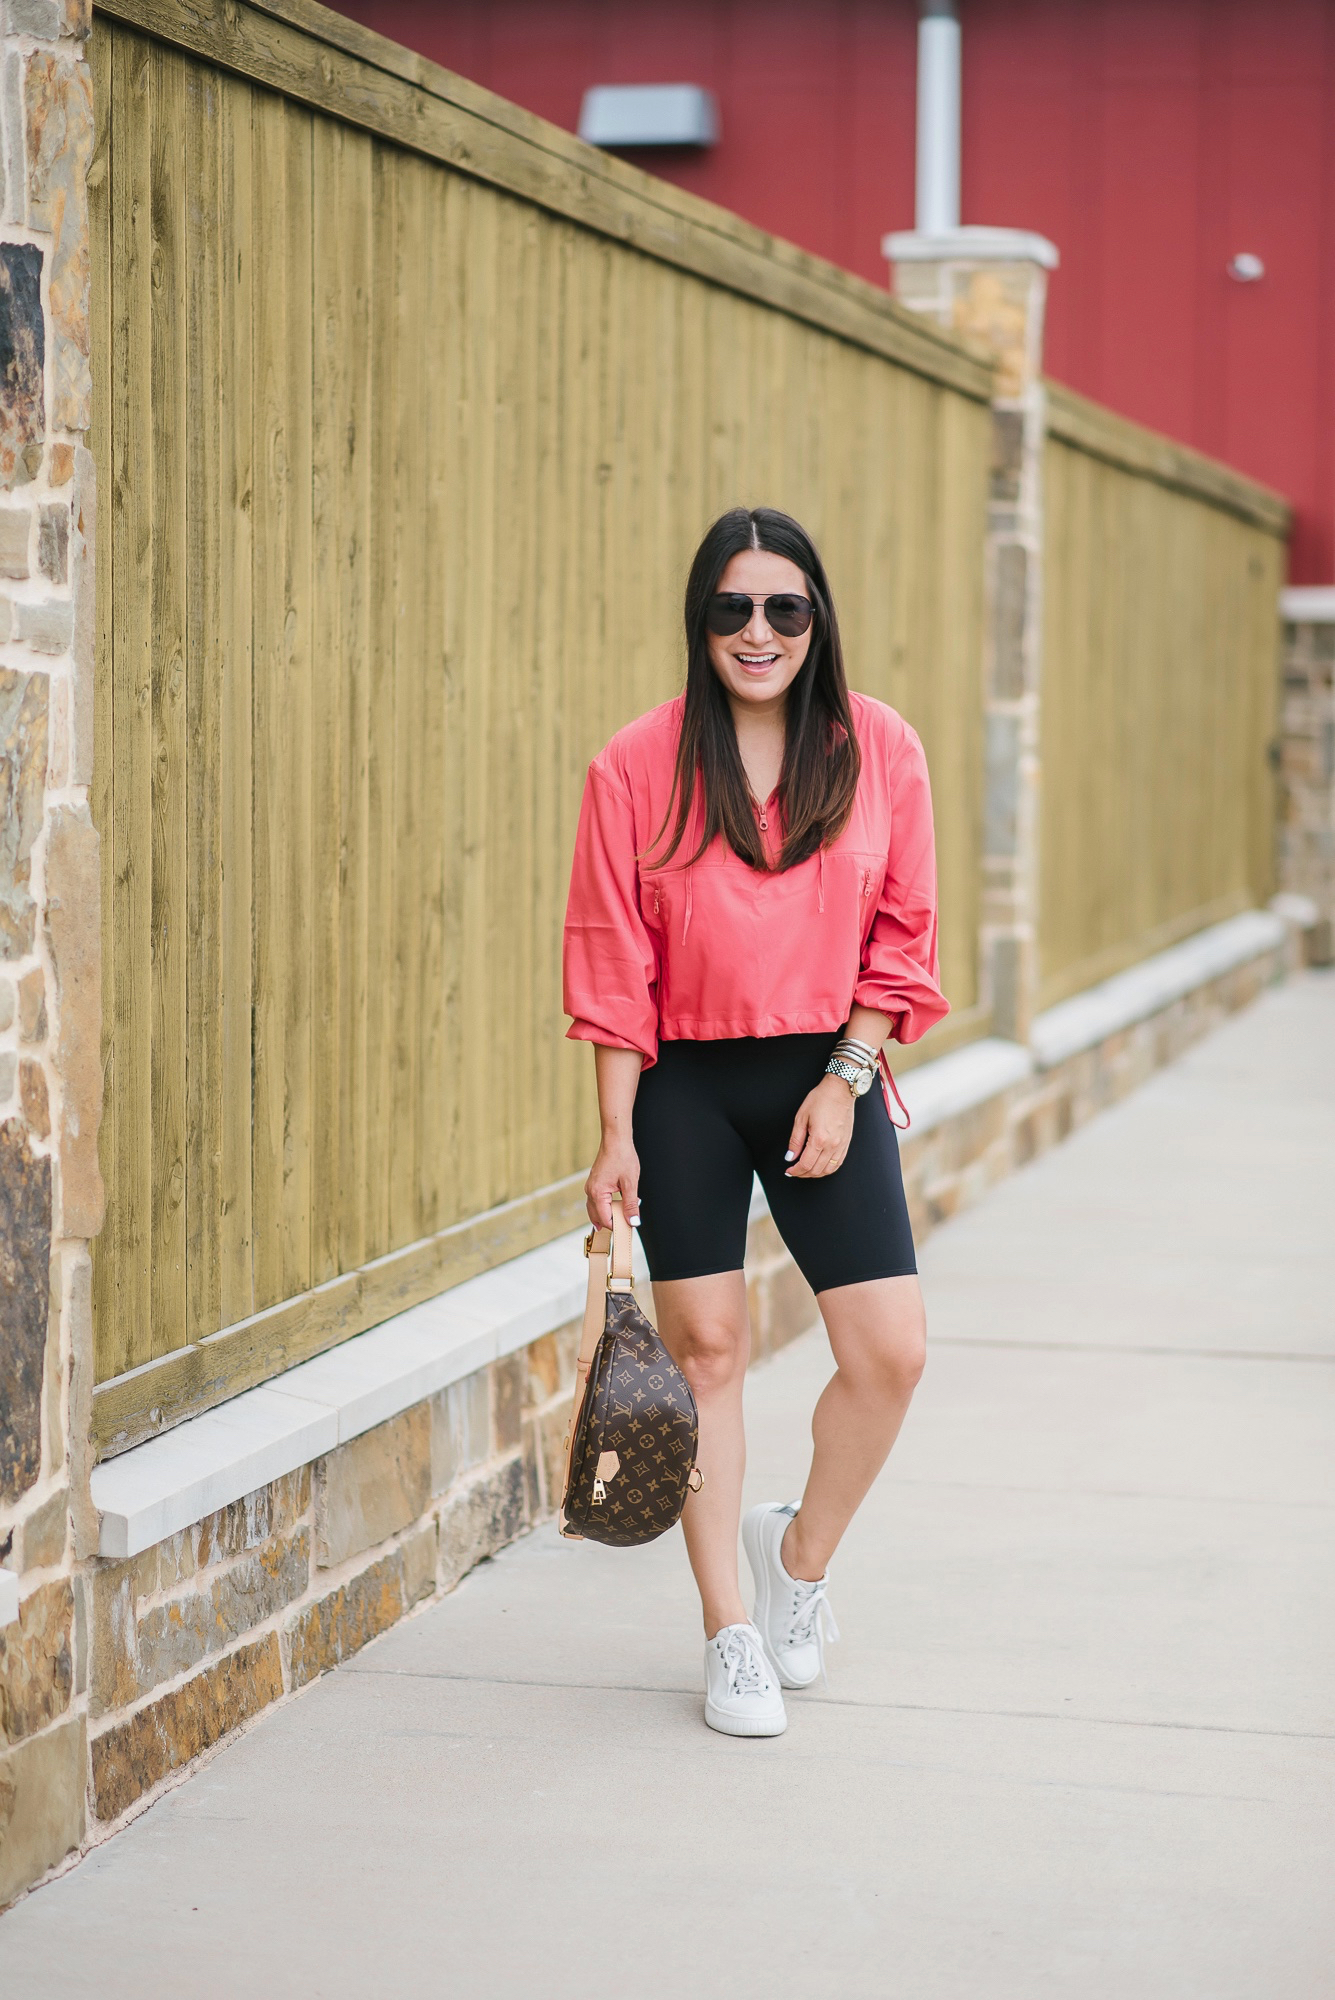 Houston top fashion blogger LuxMommy shares 3 ways to style bike shorts